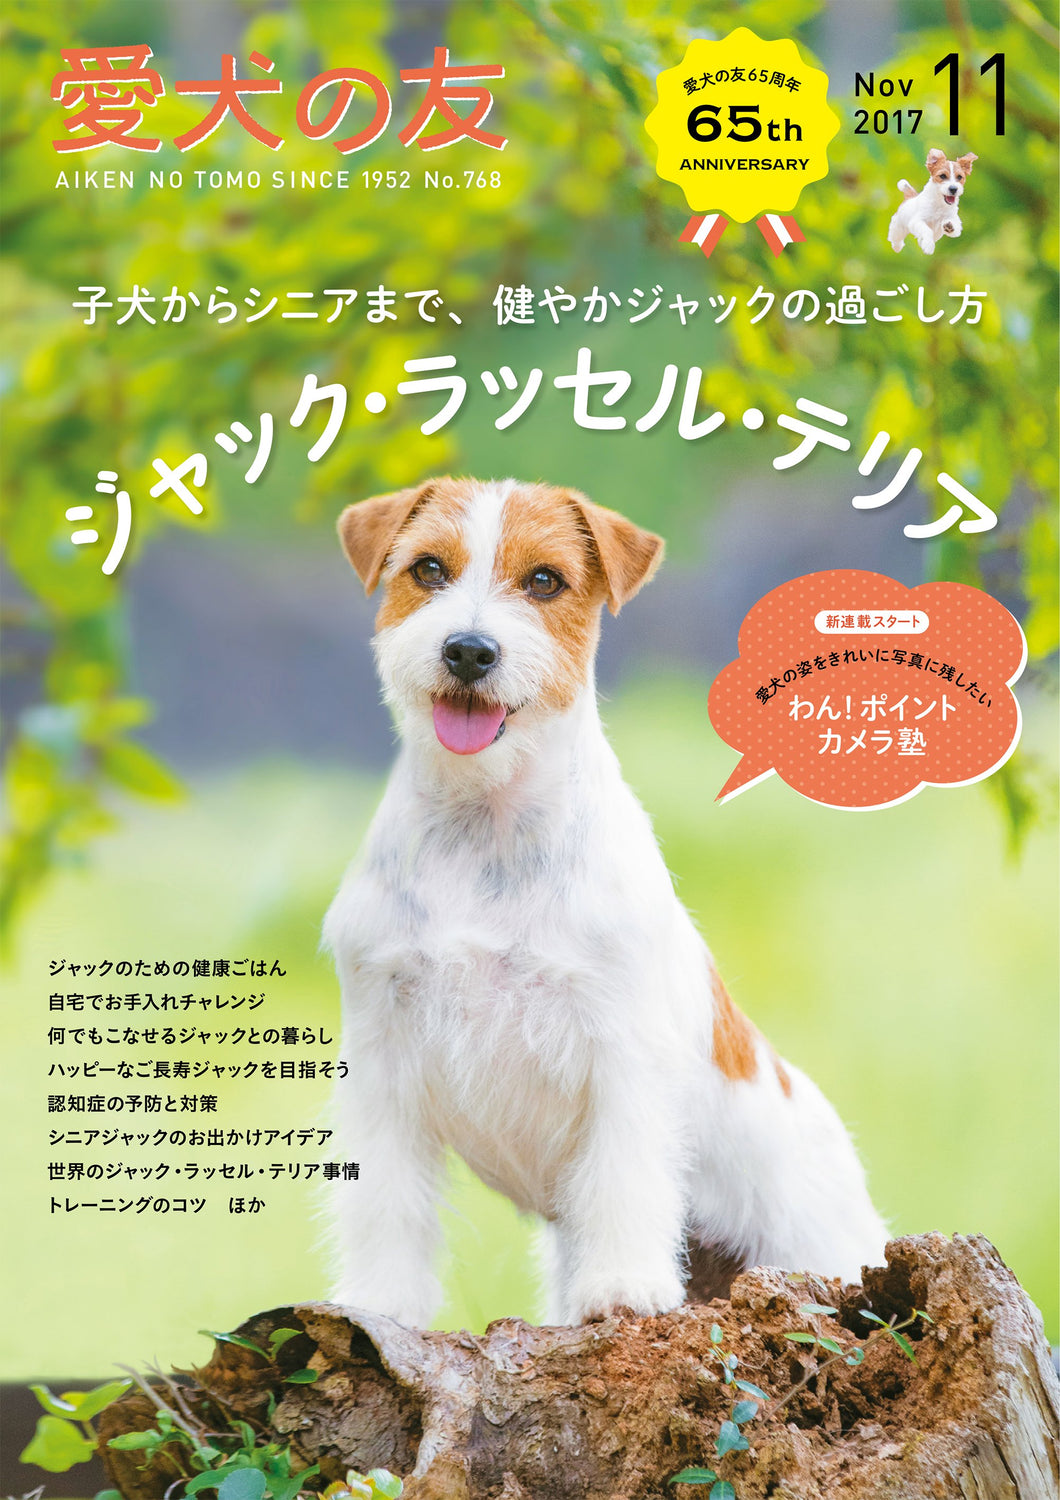 Dog friend November 2017 issue